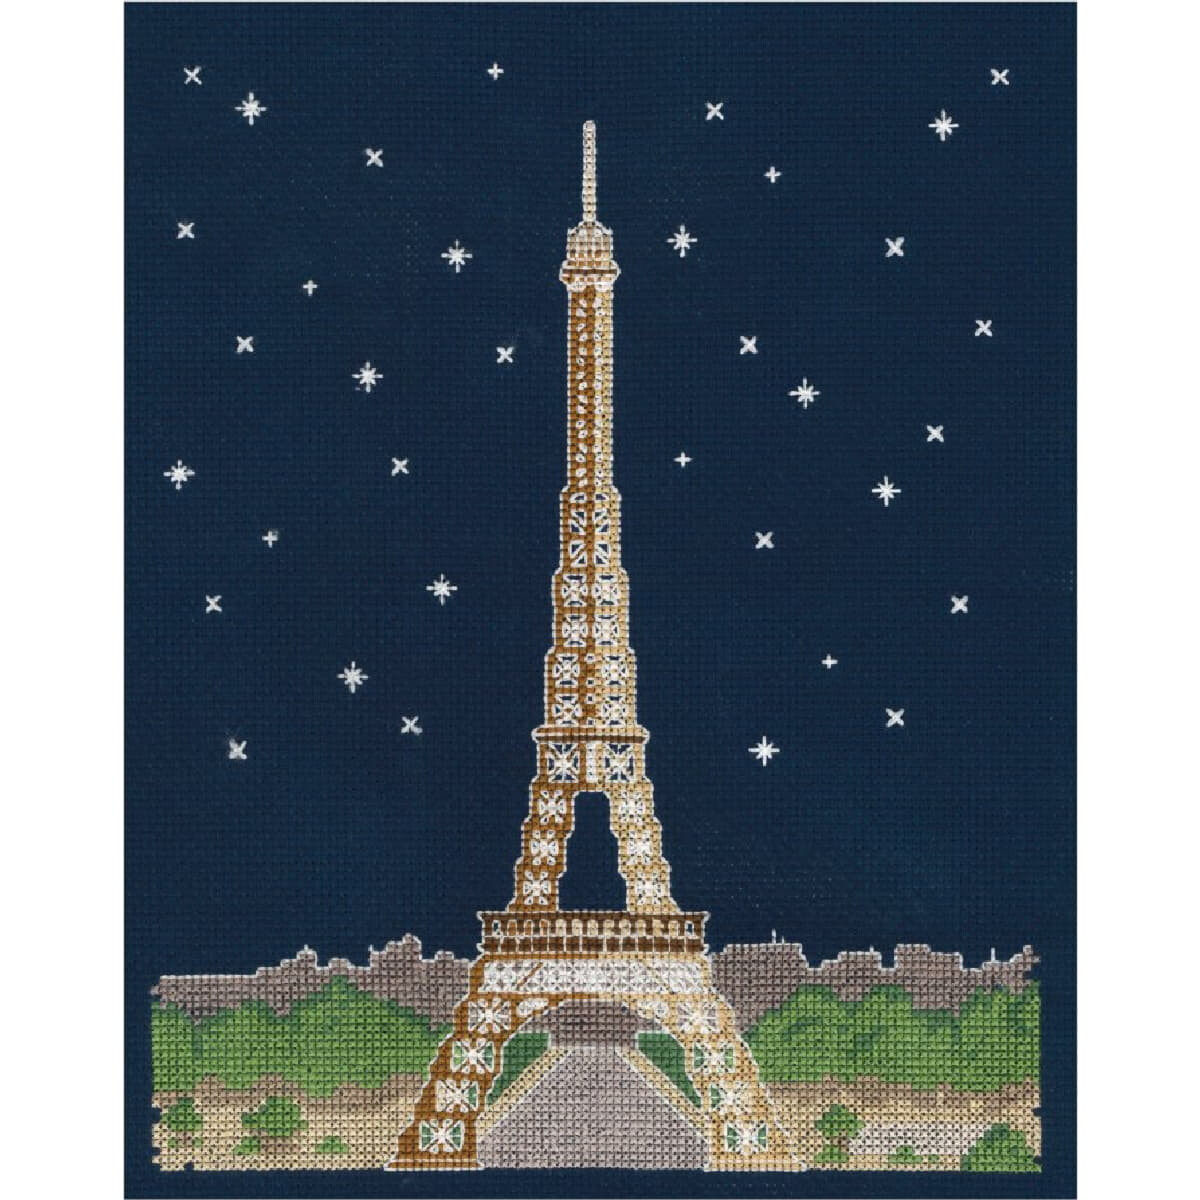 DMC counted cross stitch kit "Paris by Night",...